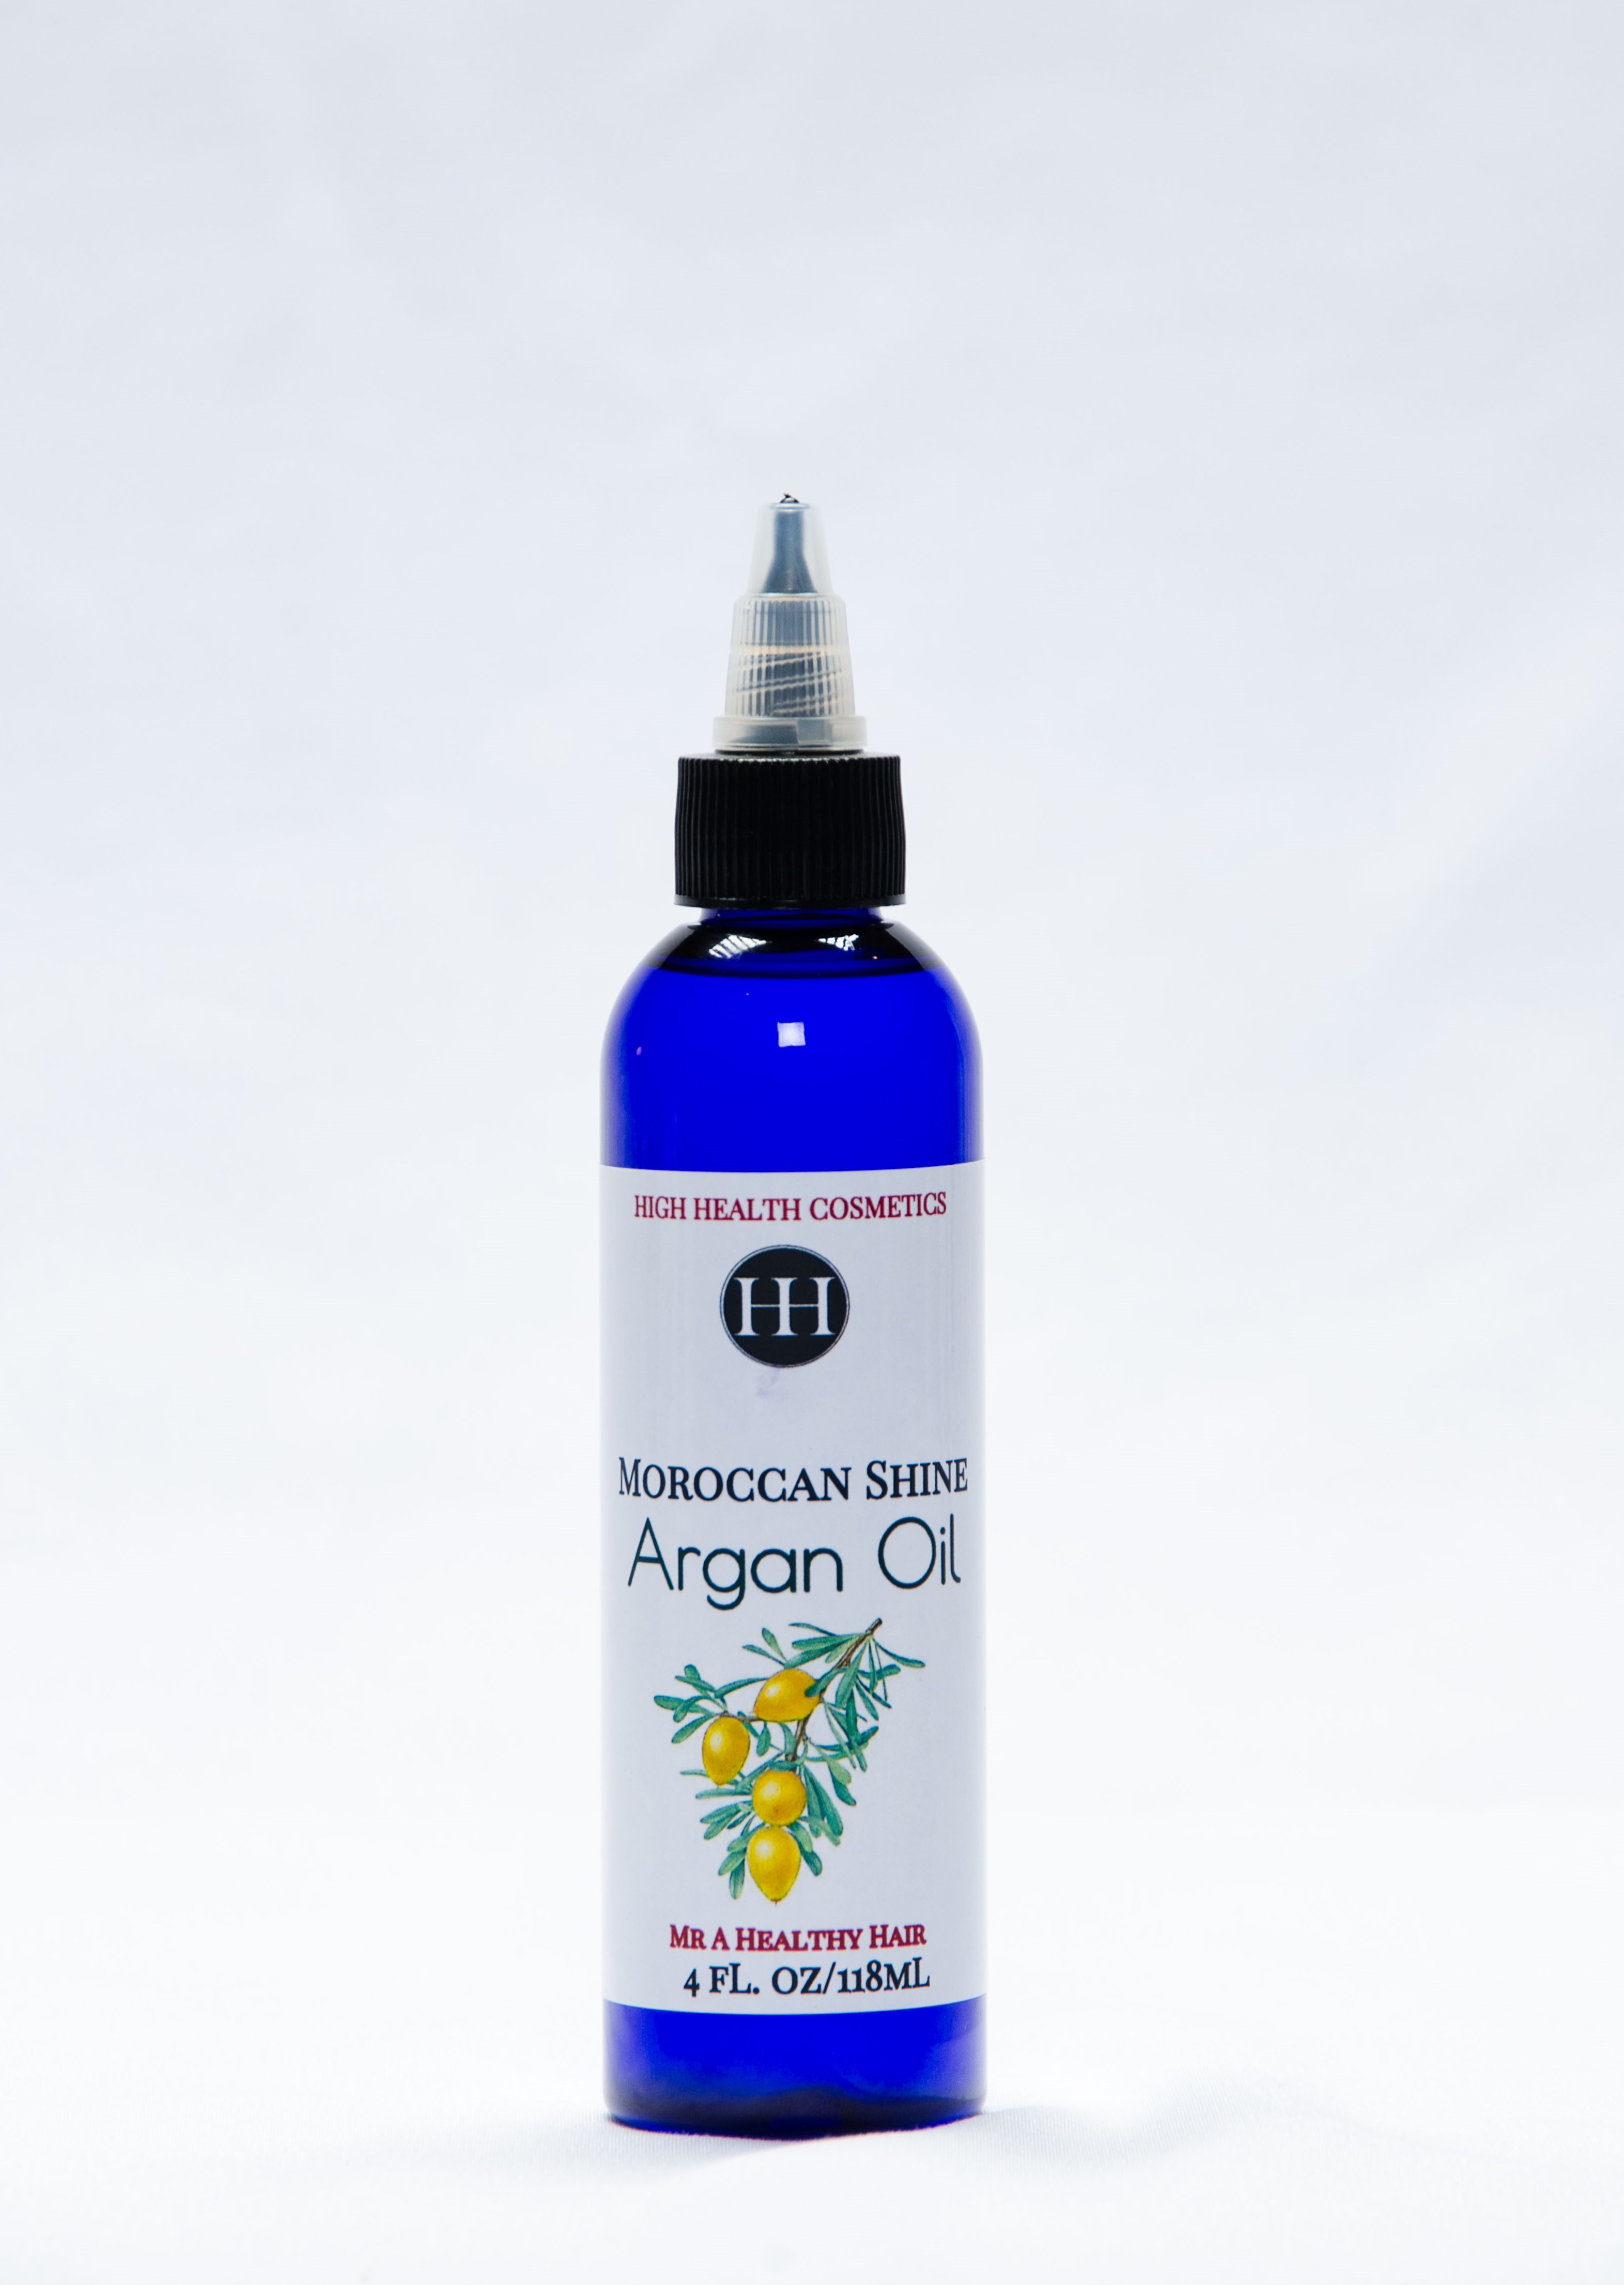 MOROCCAN SHINE ARGAN OIL 4oz - High Health Cosmetics